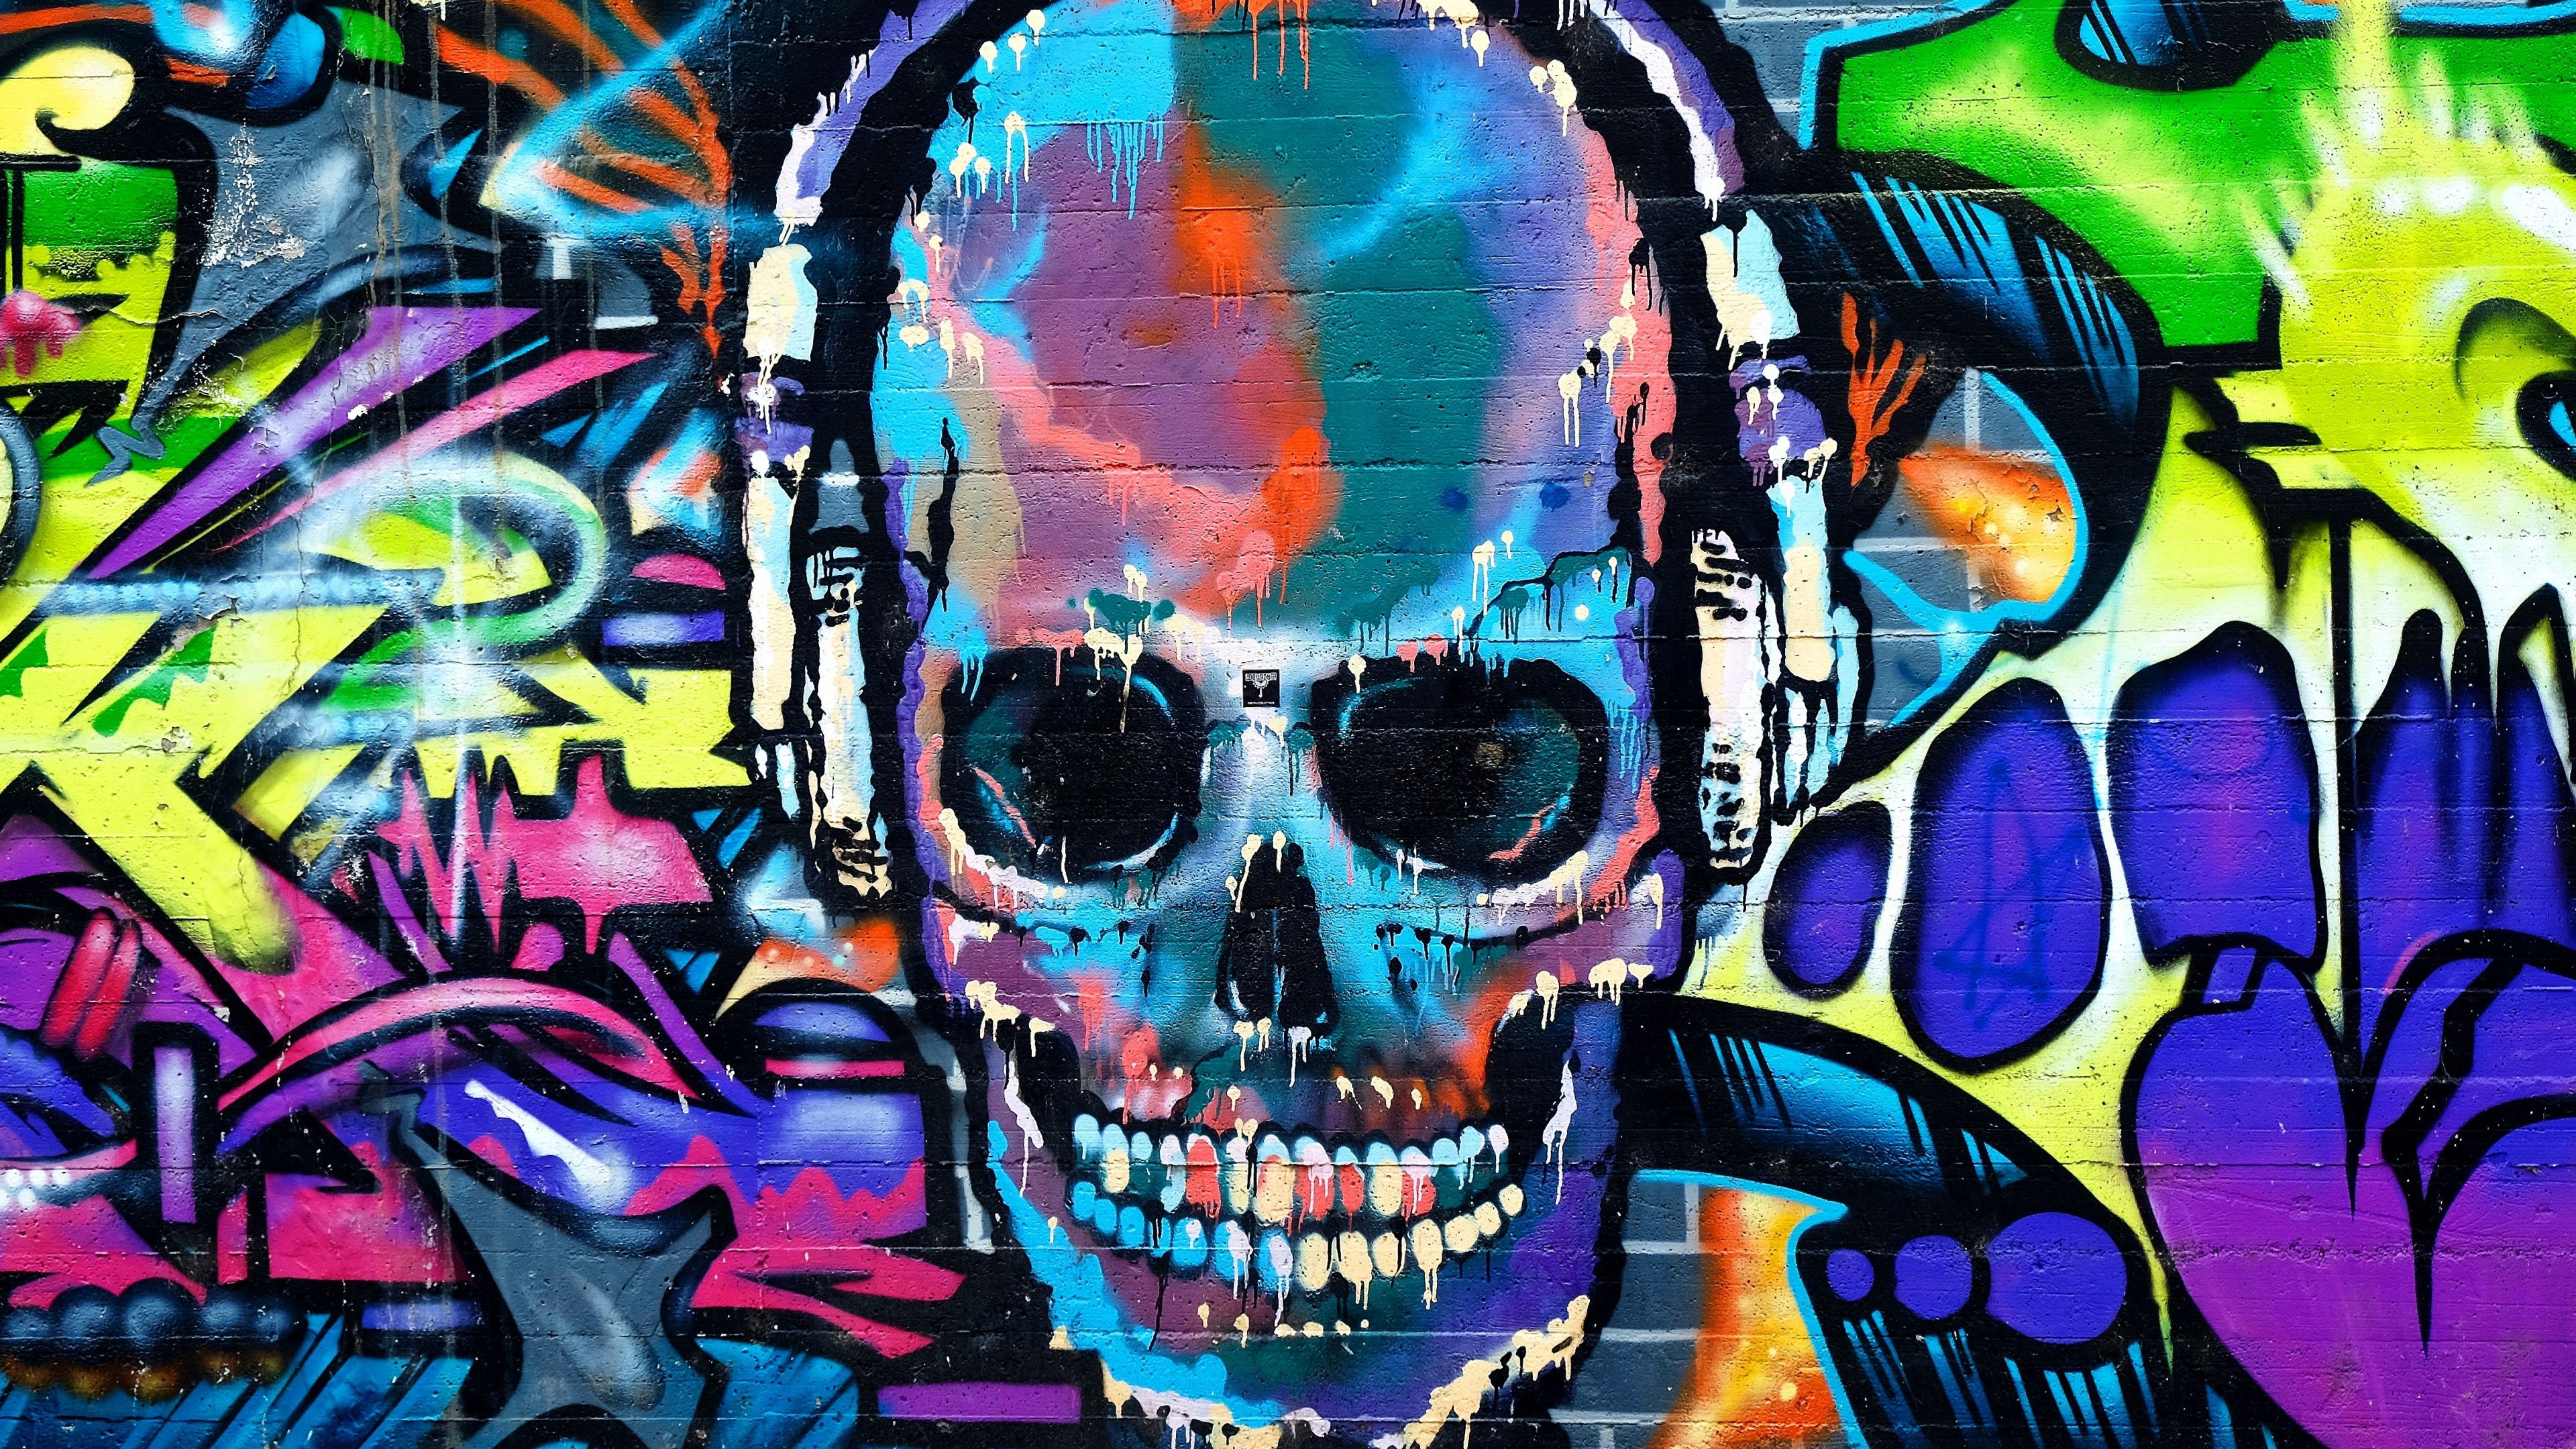 Descargar 3840x2160 fondo de pantalla de graffiti, cráneo, colorido, arte callejero